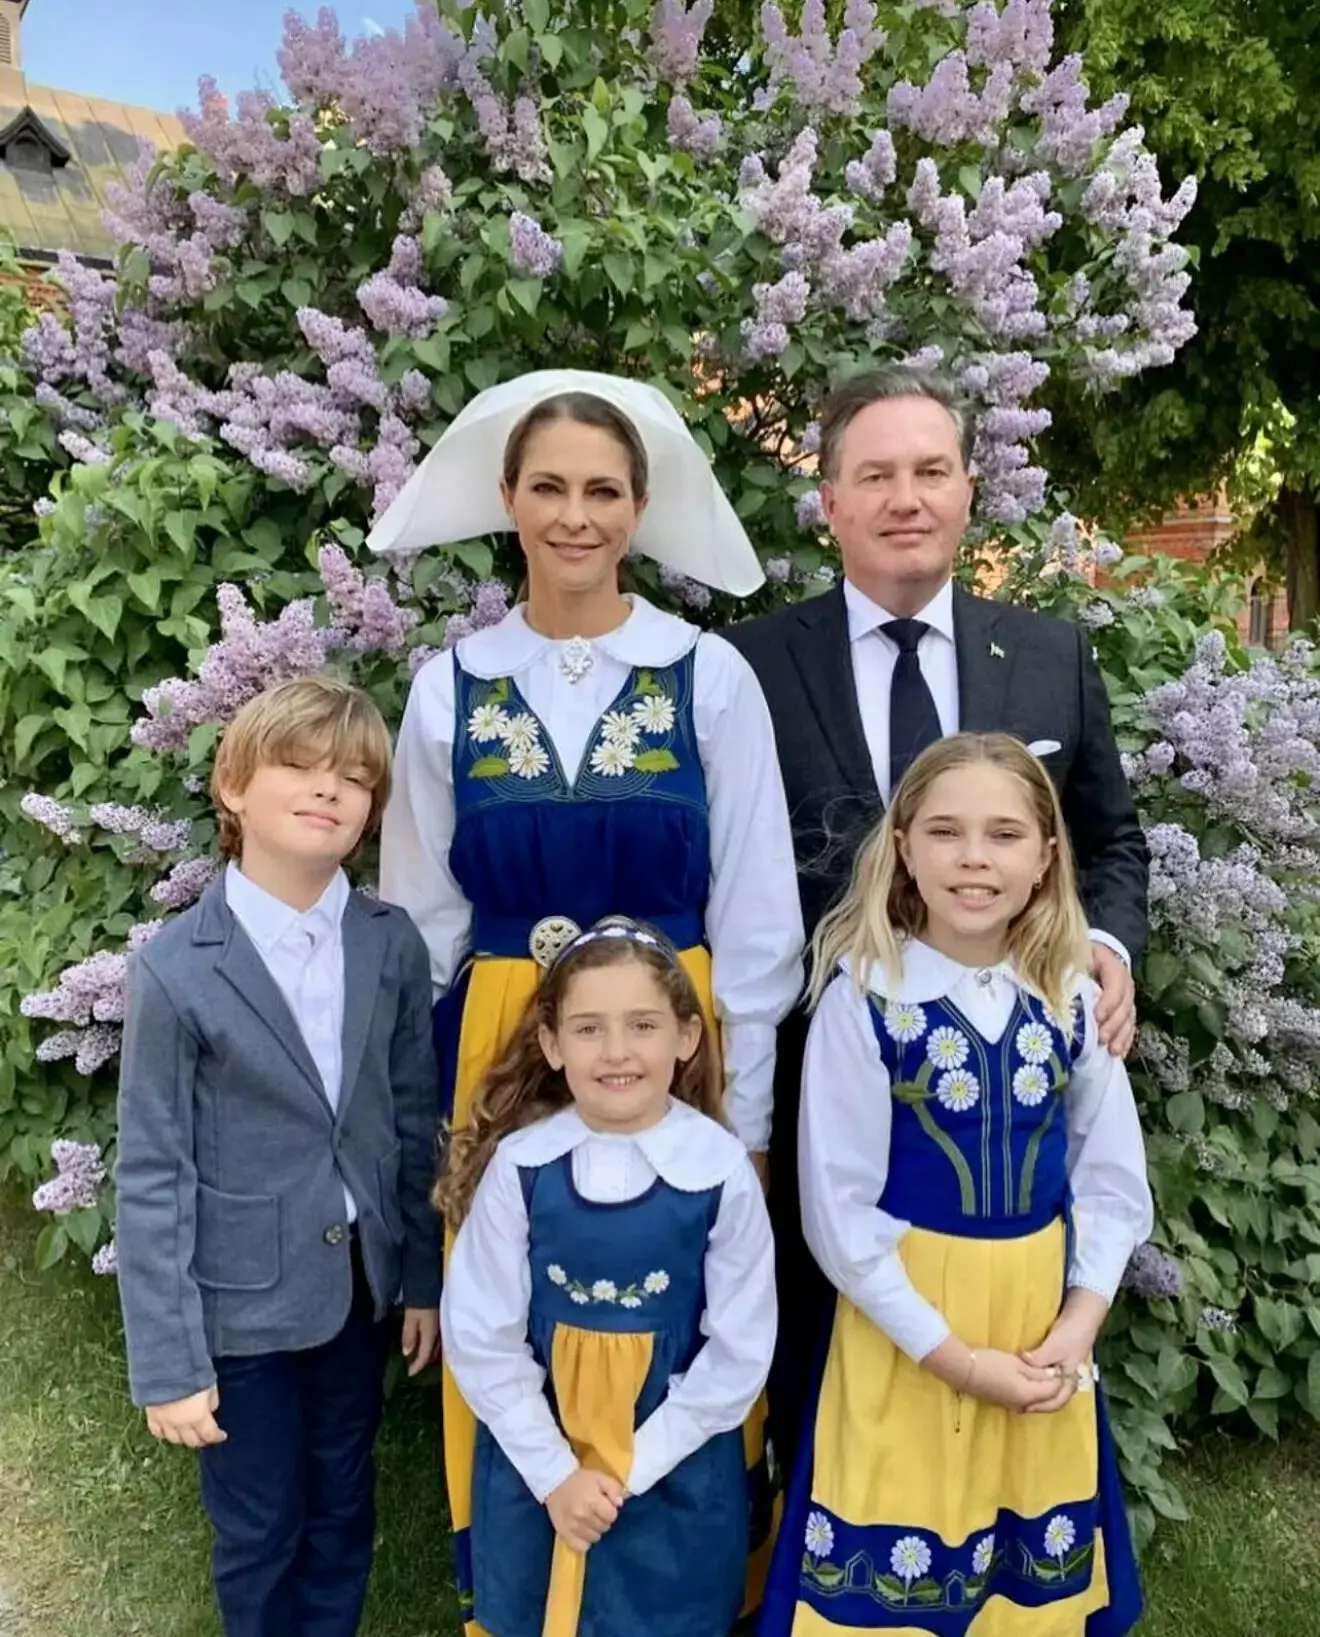 Prinsessan Madeleine, prinsessan Adrienne och prinsessan Leonore i Sverigedräkten